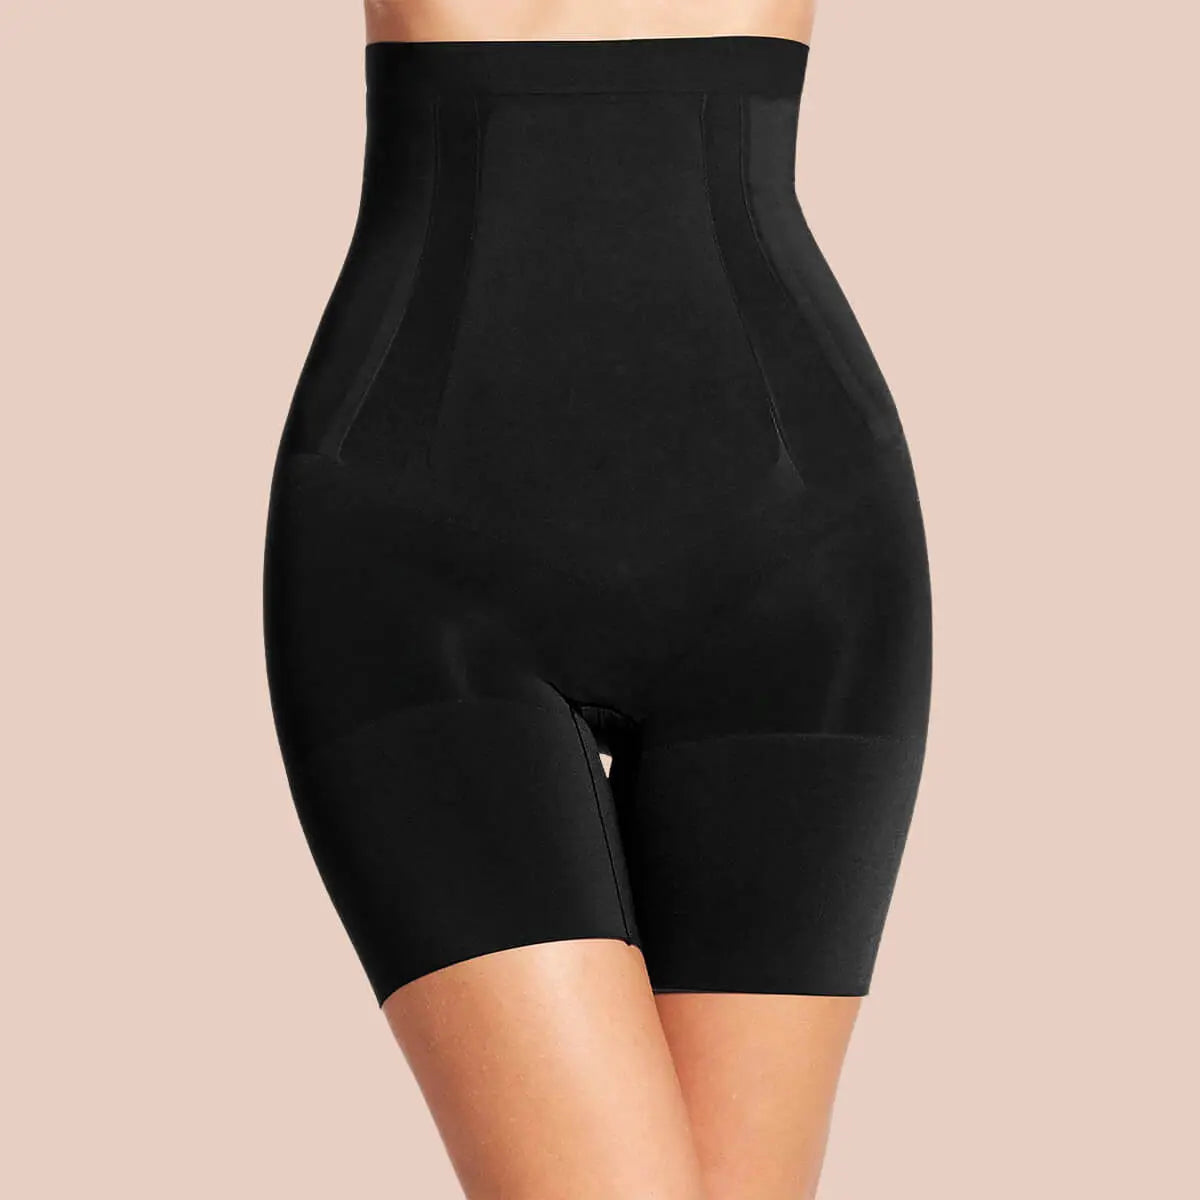 HAPIMO Discount Women's Hip Lifter Shapewear Control Panties High Waist  Trainer Tummy Control Booty Short Body Shaper Underwear Black XL